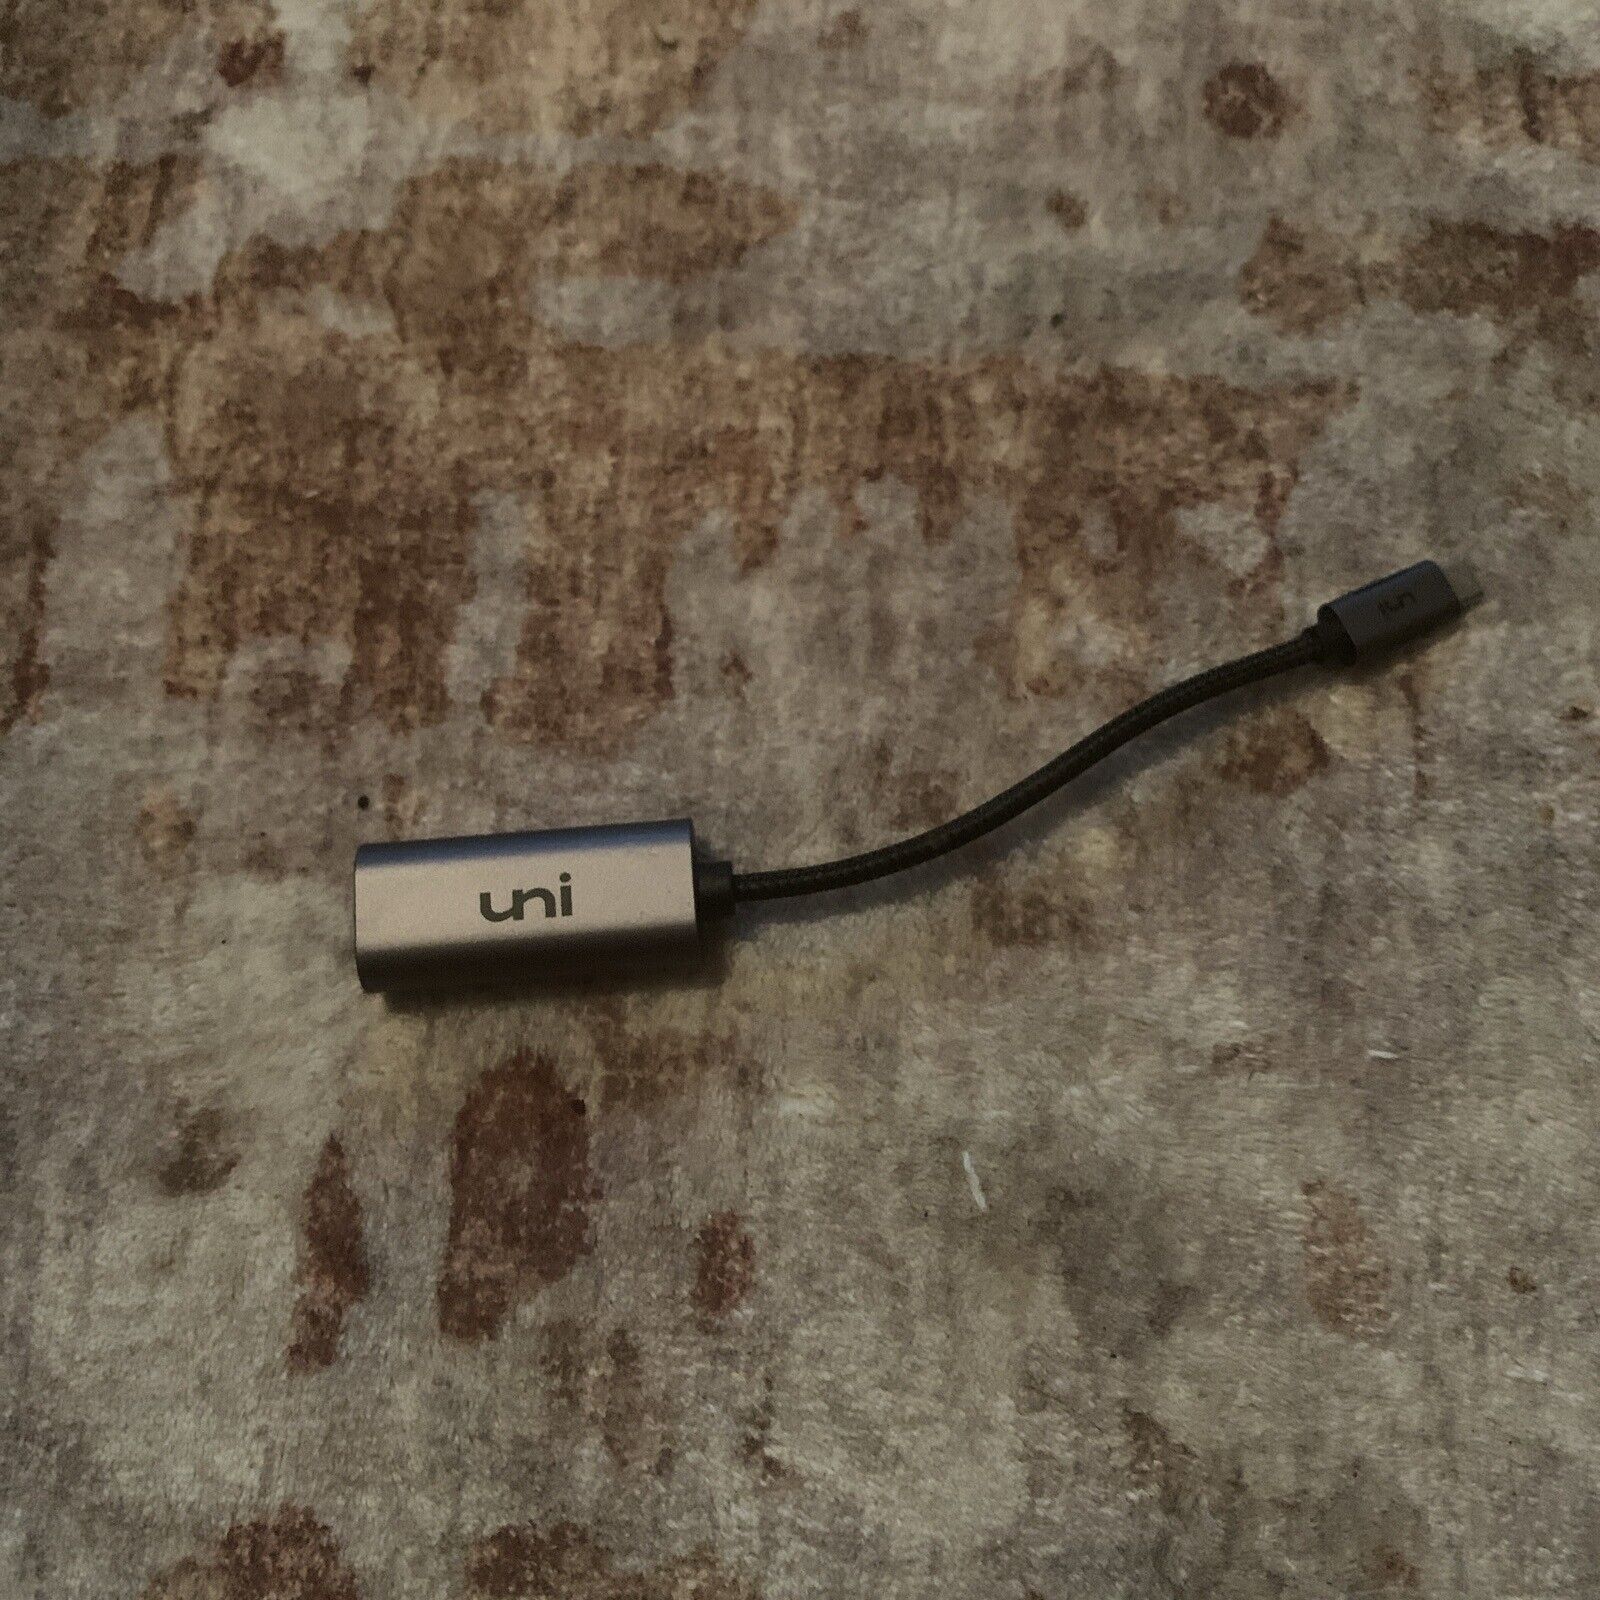 Uni USB 3.0 Ethernet Adapter